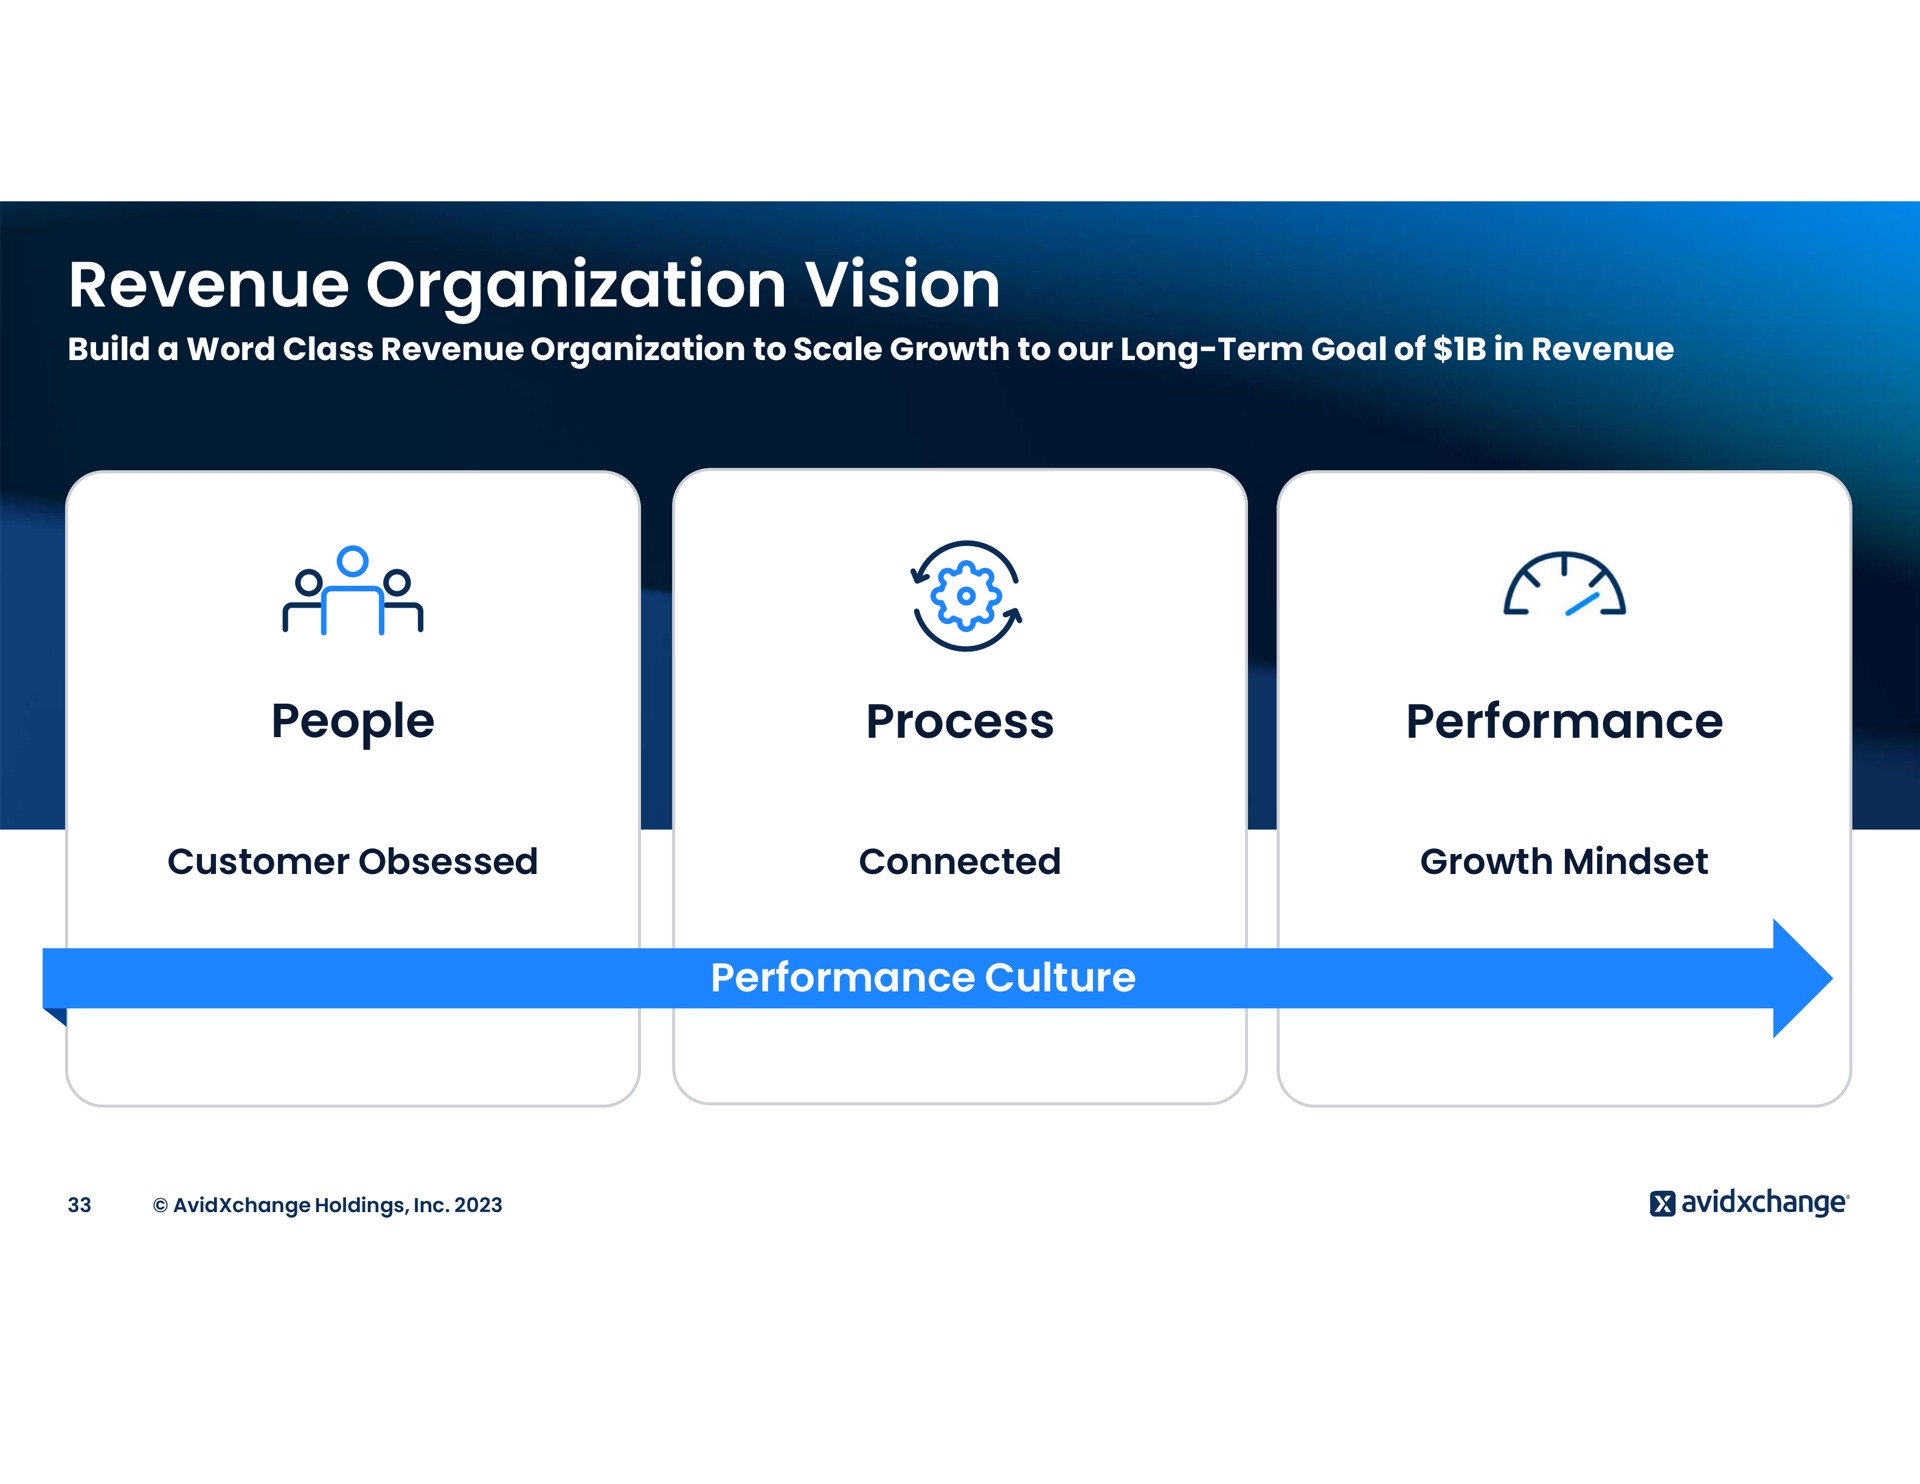 revenue organization vision people process performance ape | AvidXchange